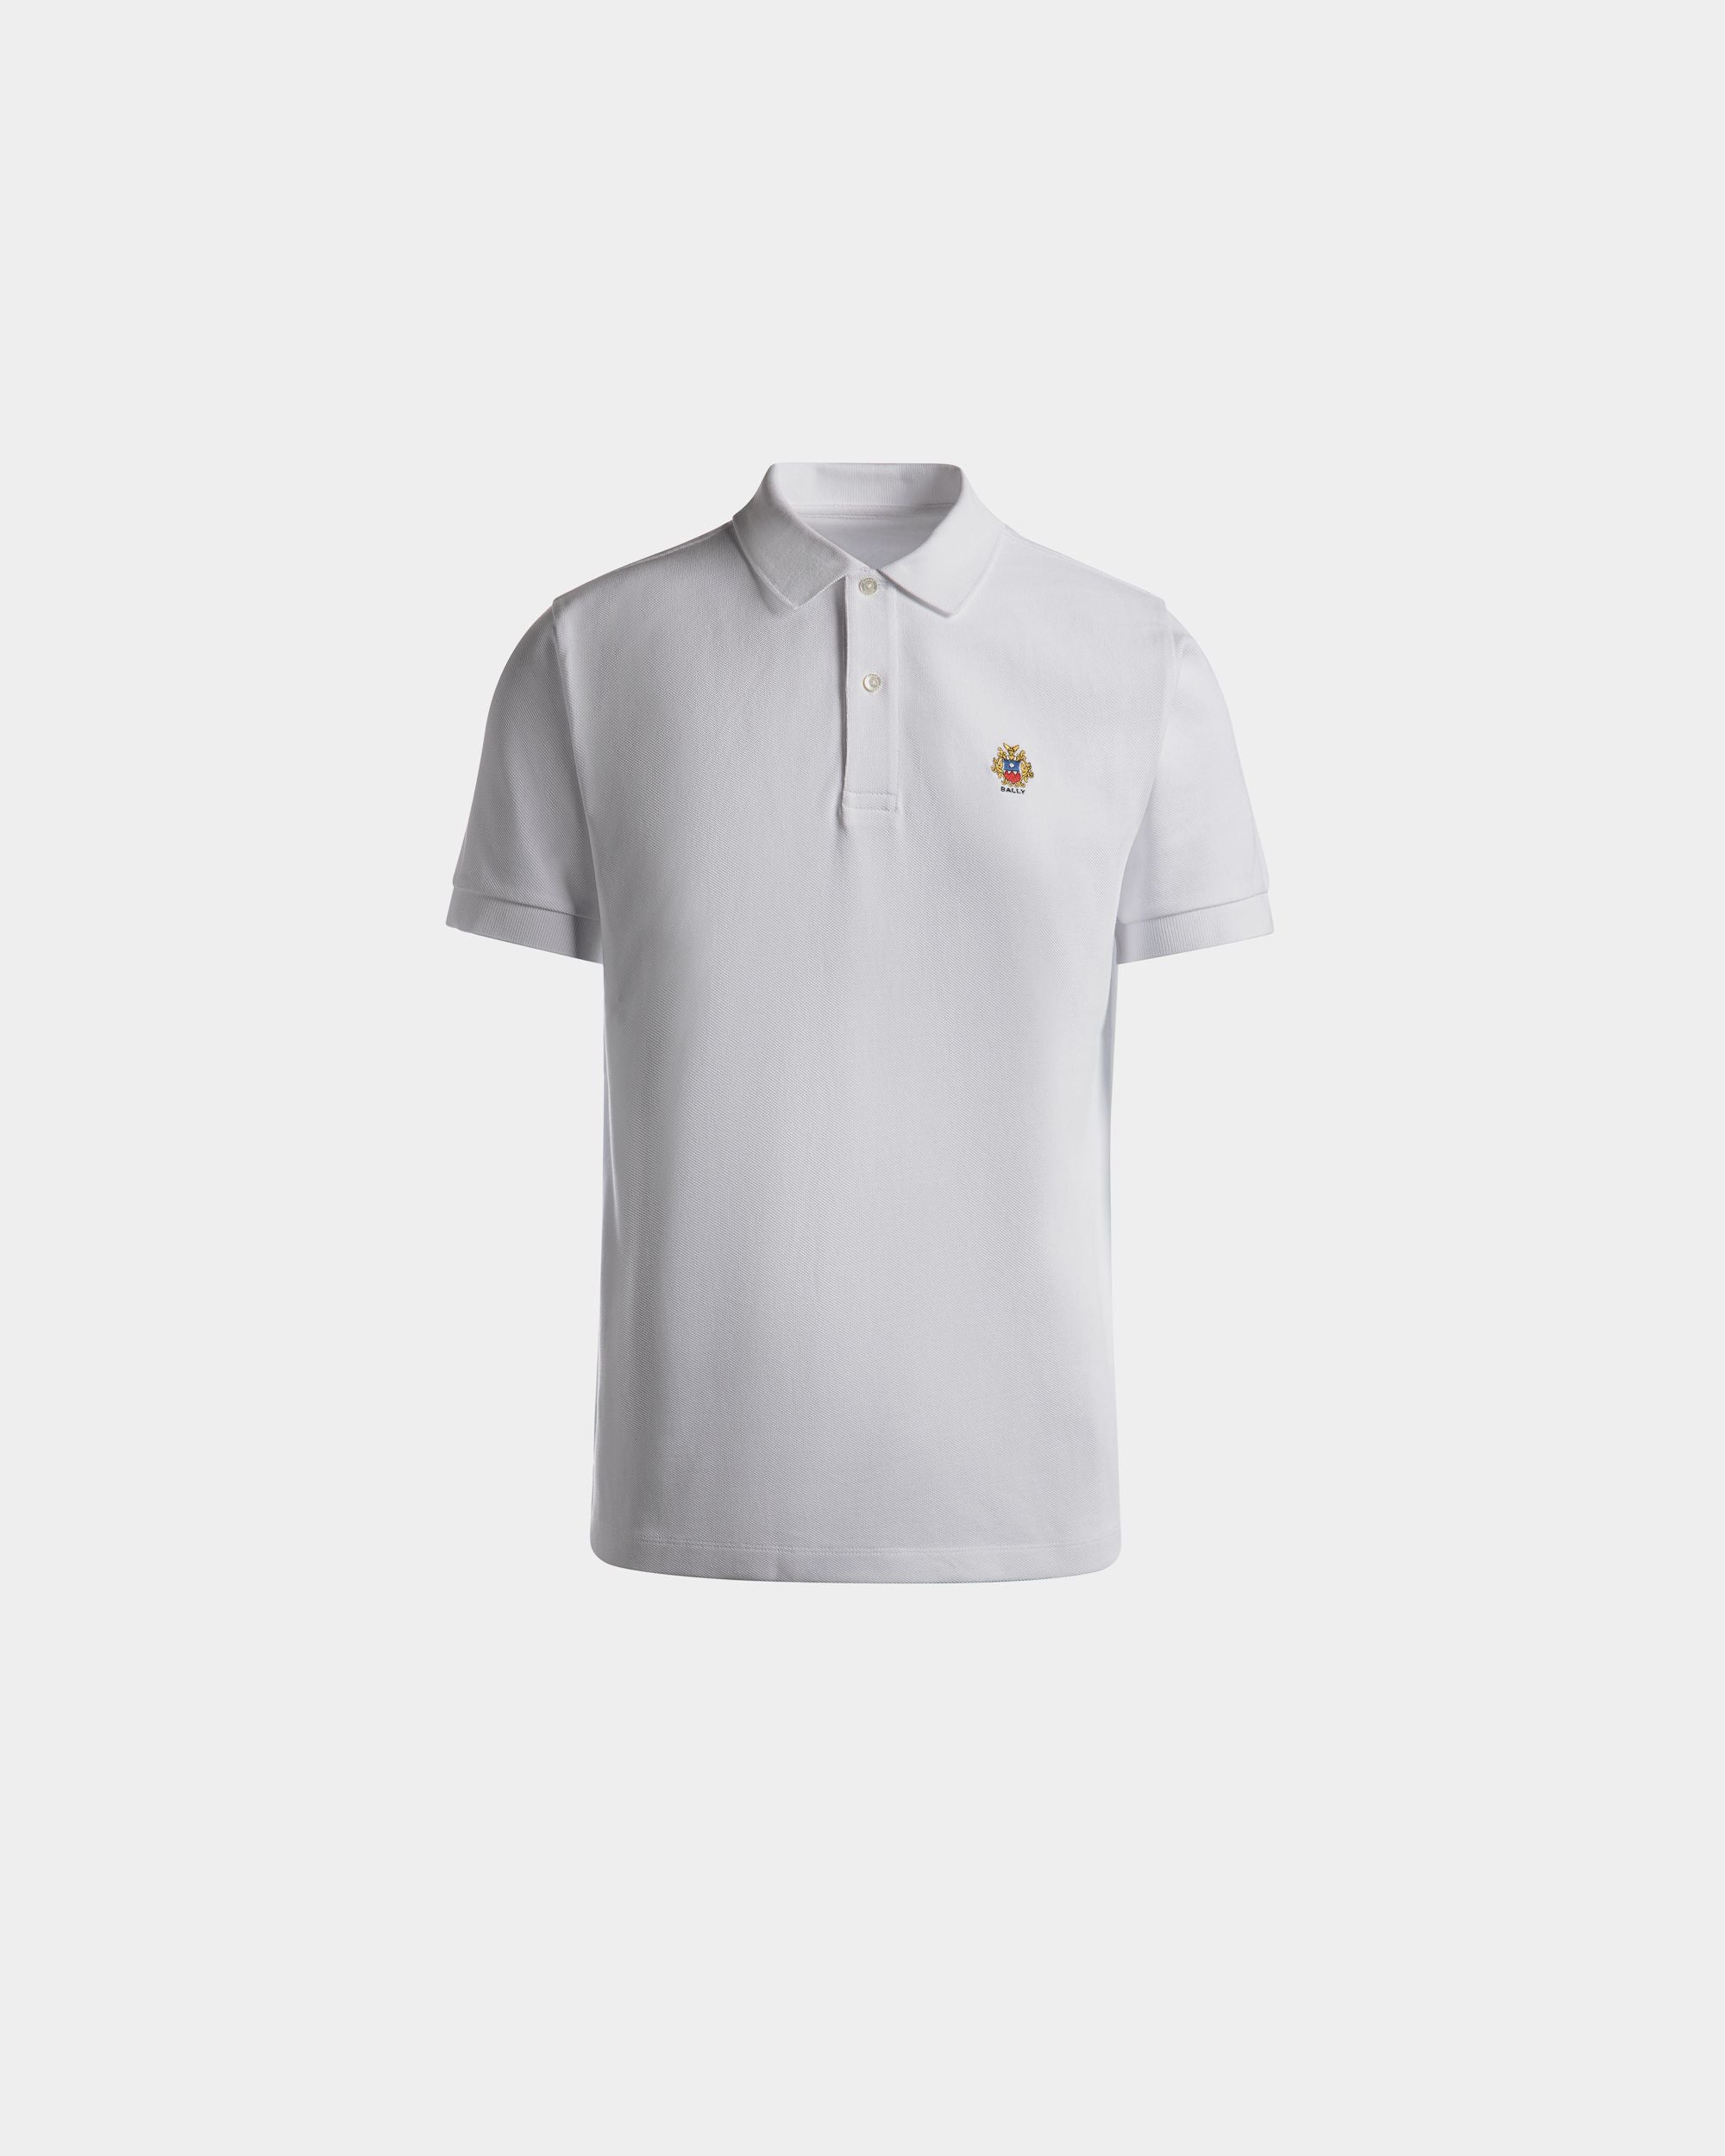 Men's Polo Shirt in White Cotton | Bally | Still Life Front